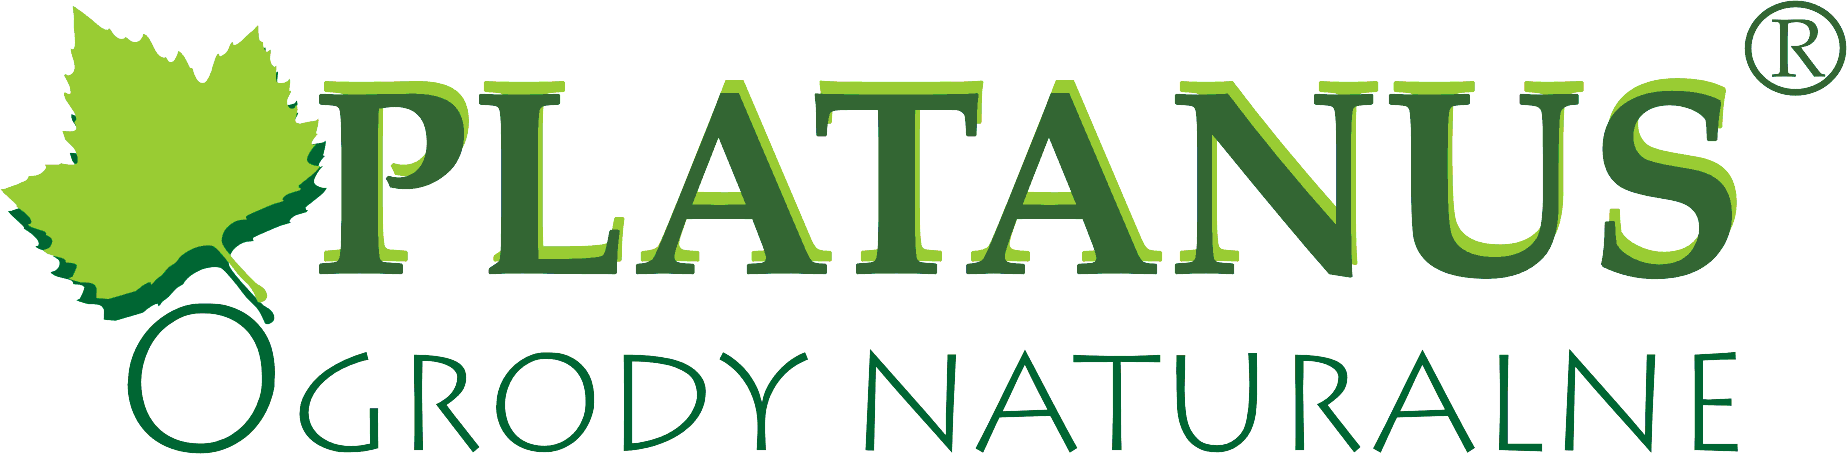 Platanus Ogrody Naturalne - logo